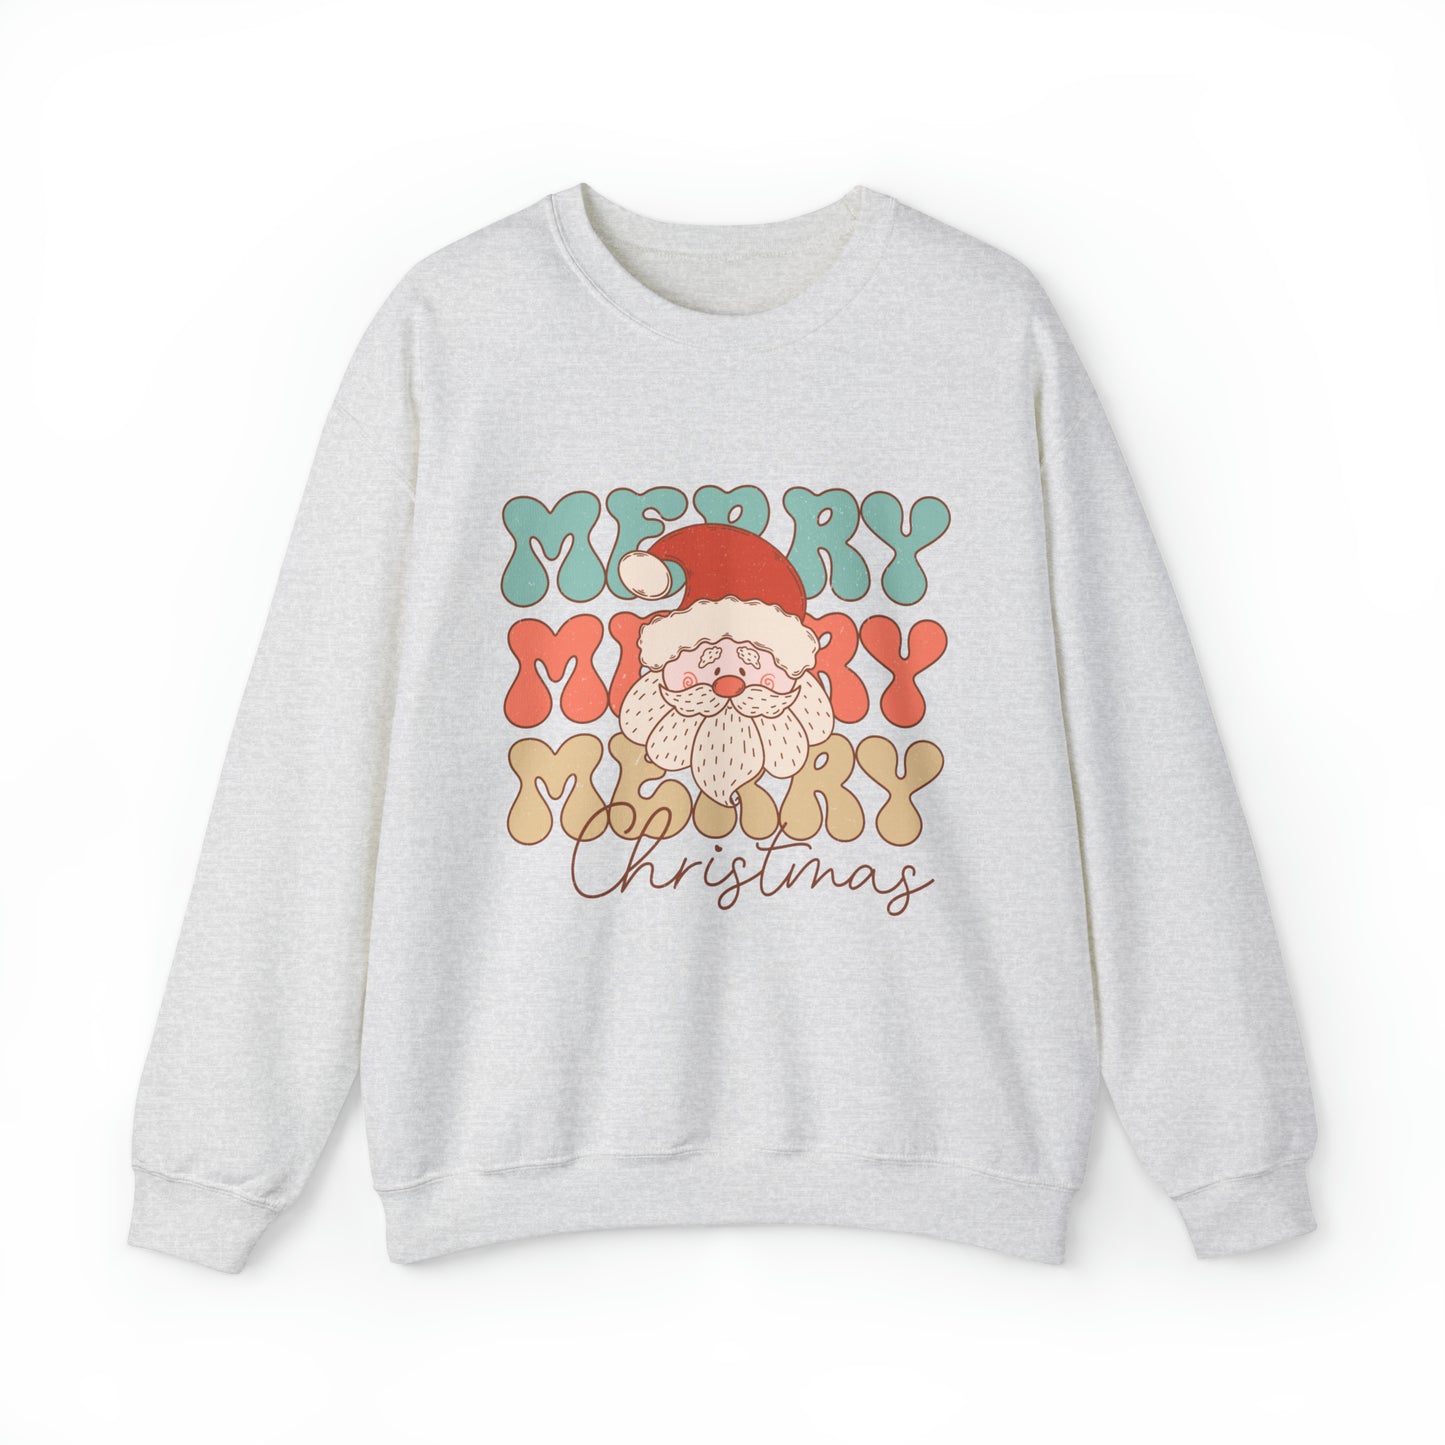 Retro Merry Christmas Sweatshirt with Santa Sweatshirt Women's